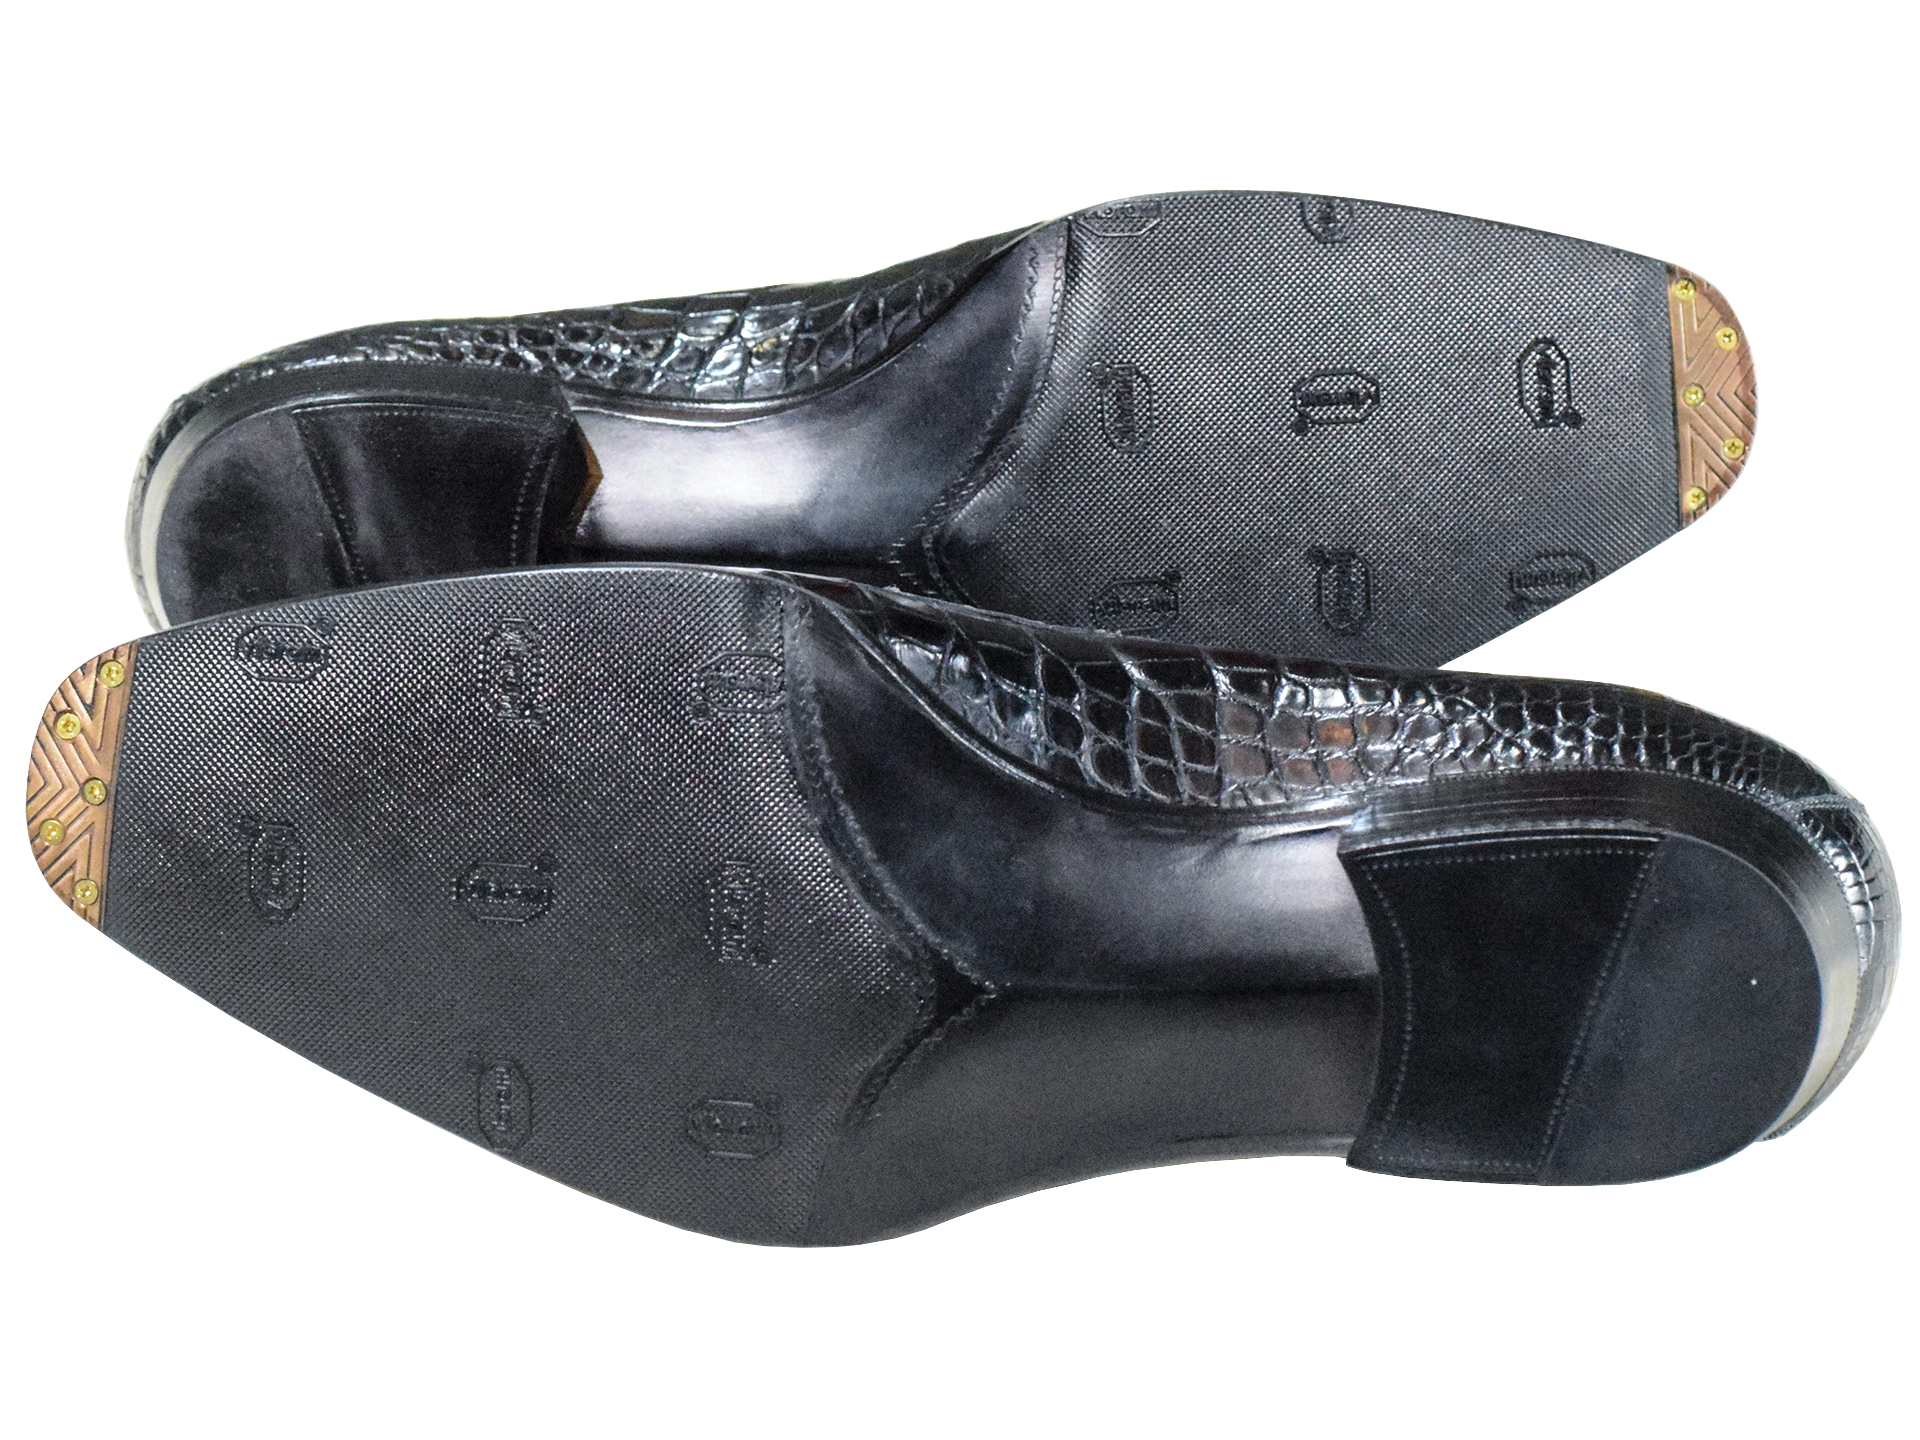 MTO Crocodile penny loafers - Optimum line